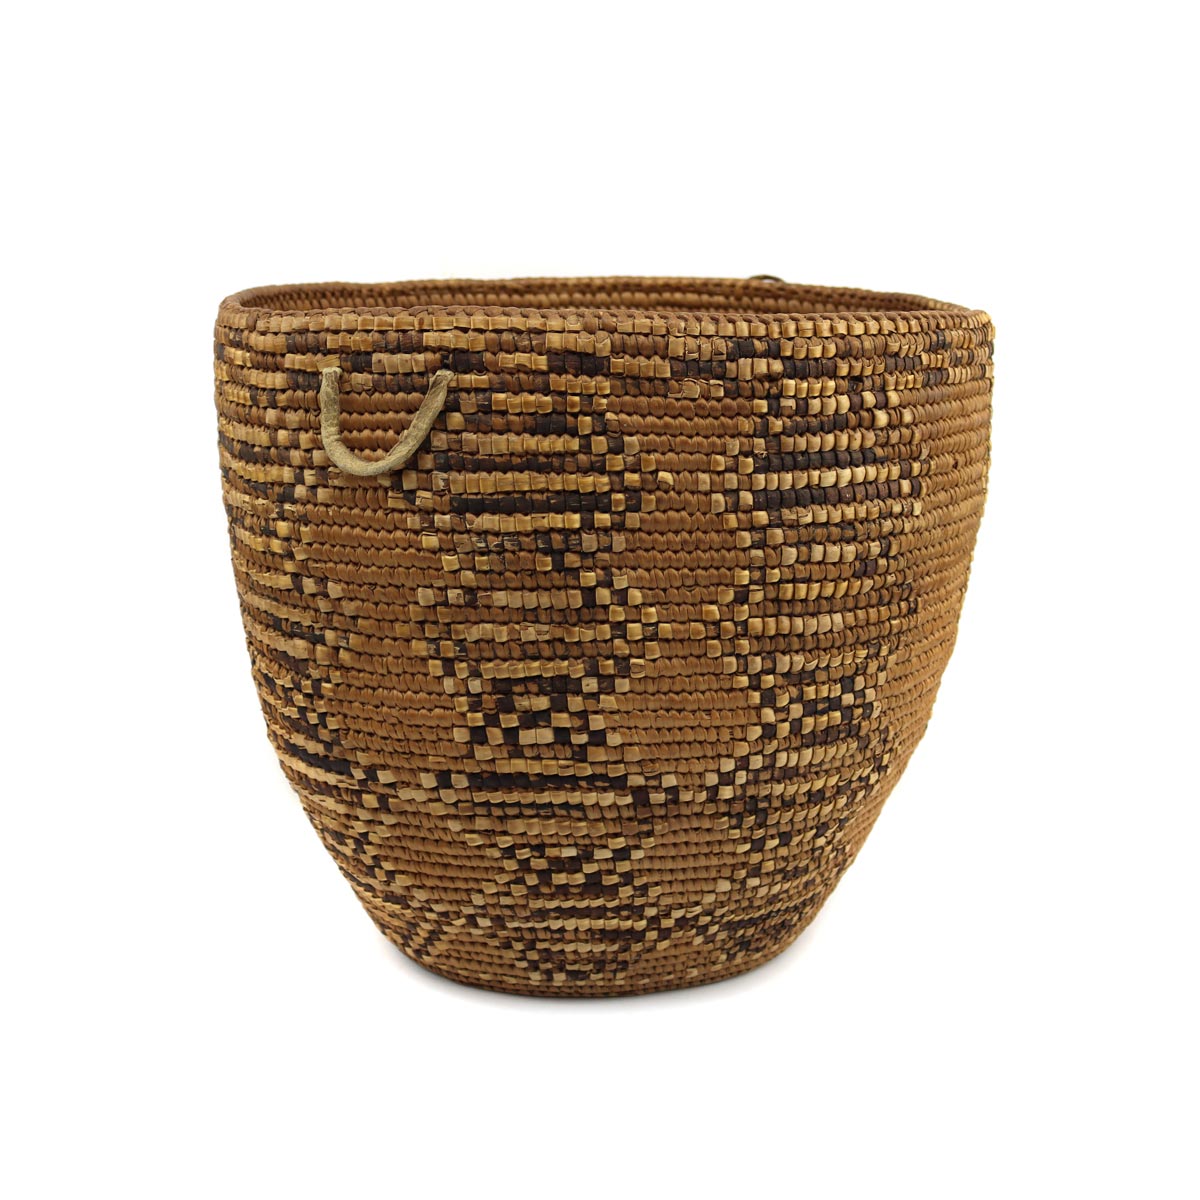 Salish Polychrome Burden Basket c. 1890s, 12" x 13.5" x 11.25" (SK92306-1222-001)2
